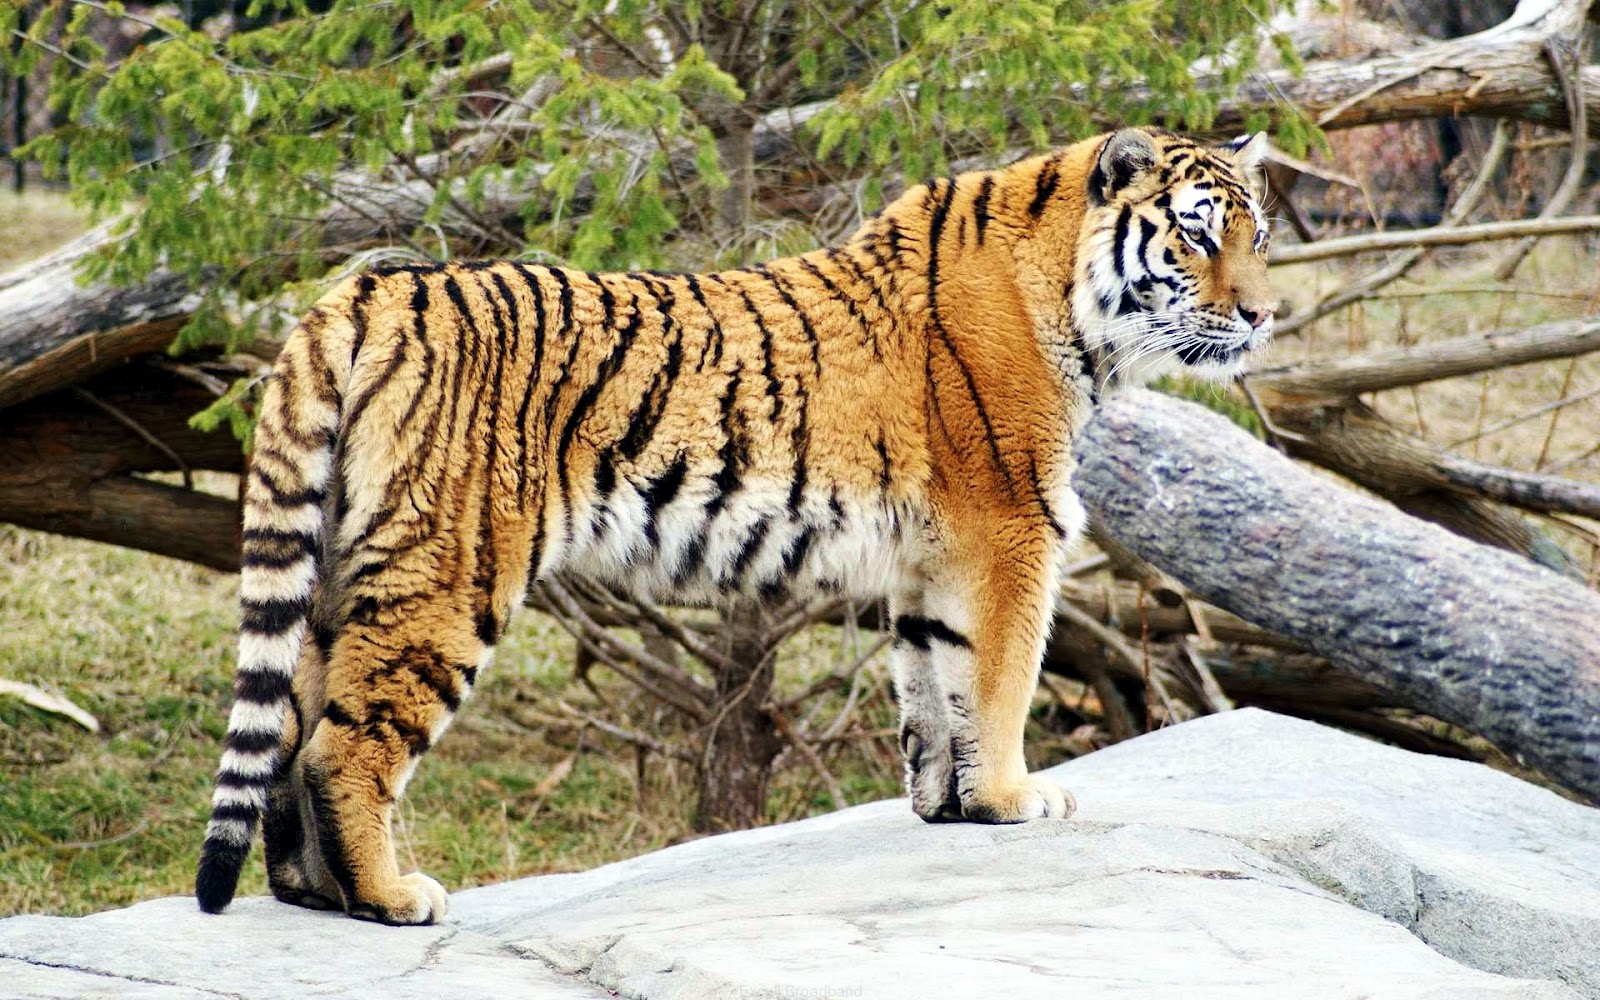 The Two Tigers - Wikipedia